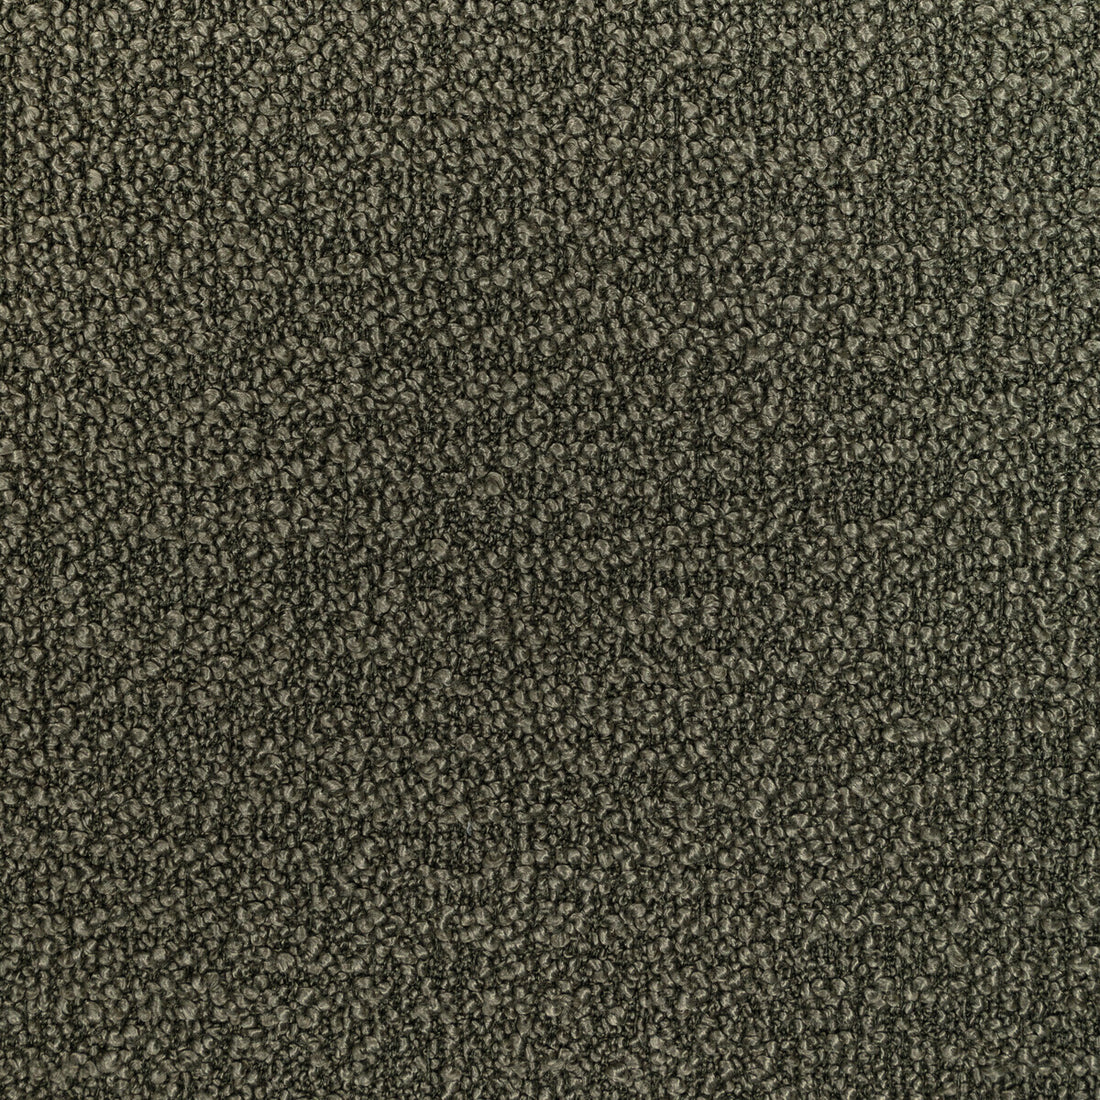 Kravet Smart fabric in 36857-323 color - pattern 36857.323.0 - by Kravet Smart in the Performance Kravetarmor collection